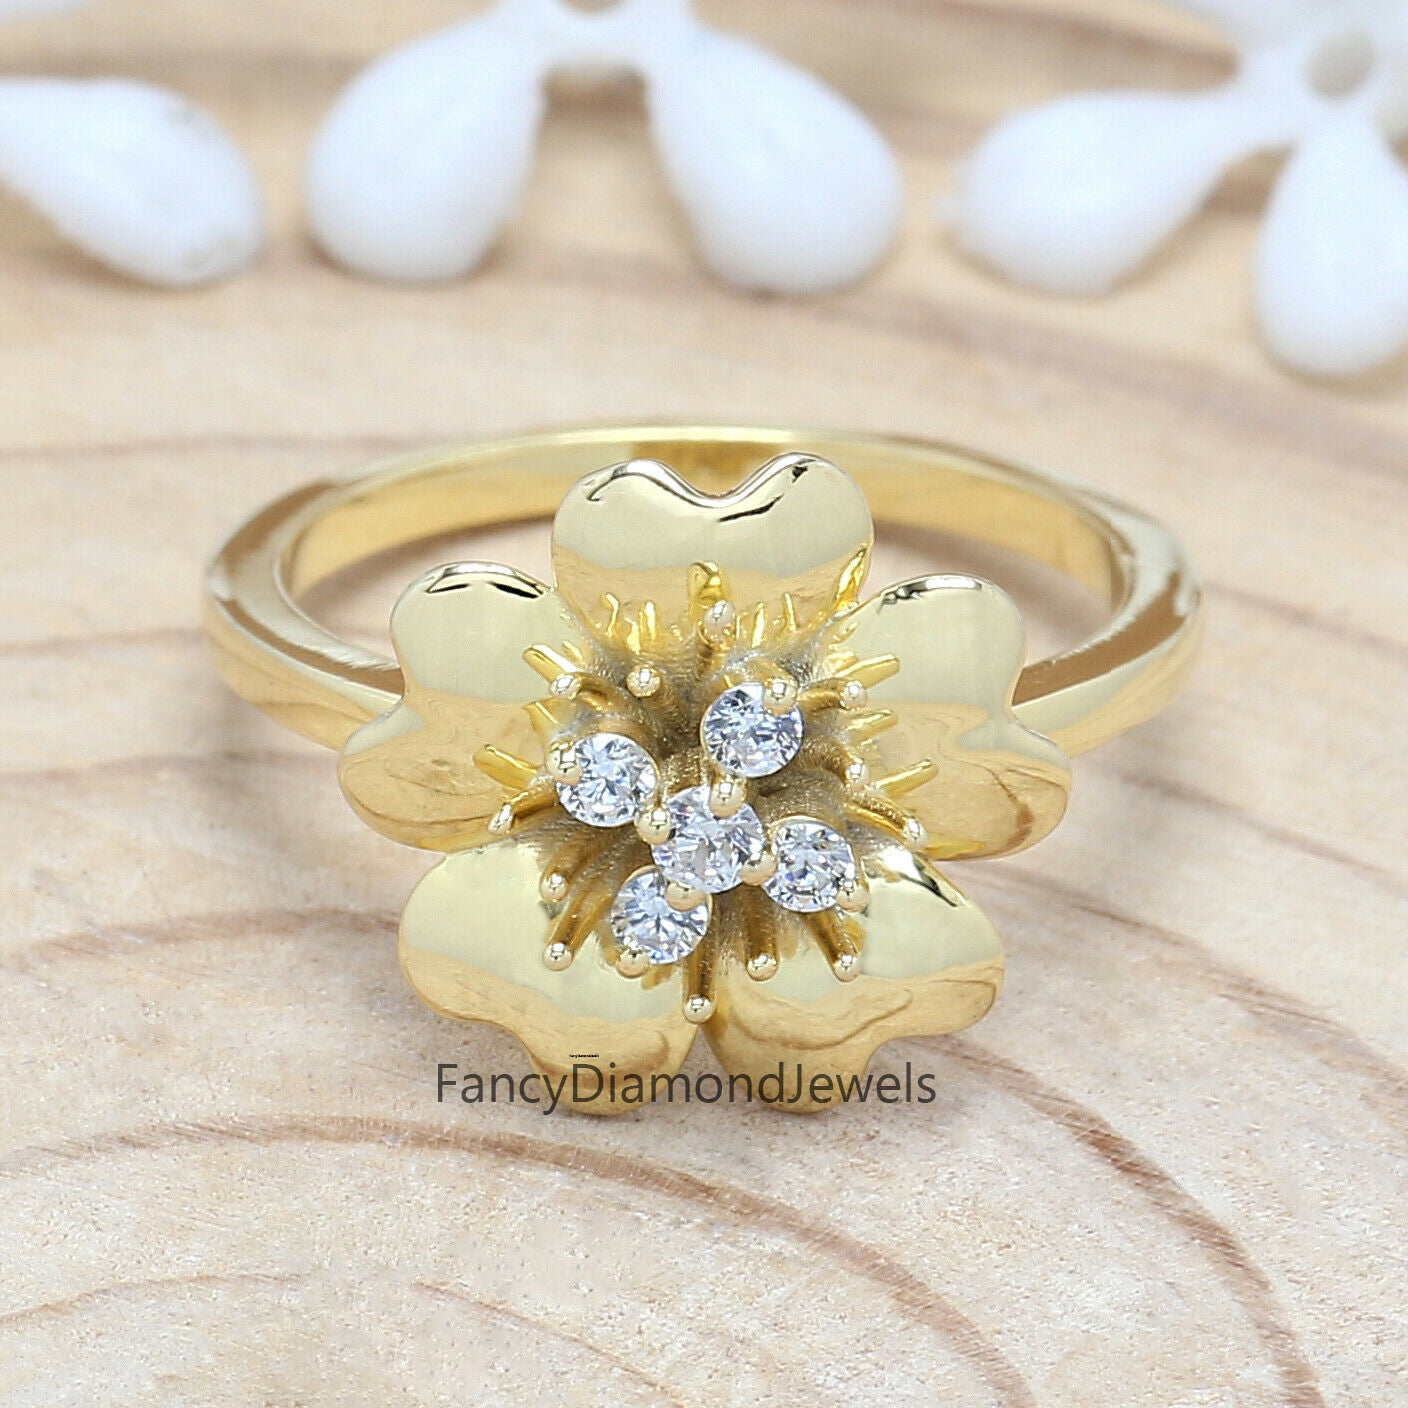 0.16 CT White Diamond Ring, Round Cut Diamond Ring, Glossy Gold Ring, Engagement Ring, 14K Yellow Gold Ring, Wedding Ring KD920